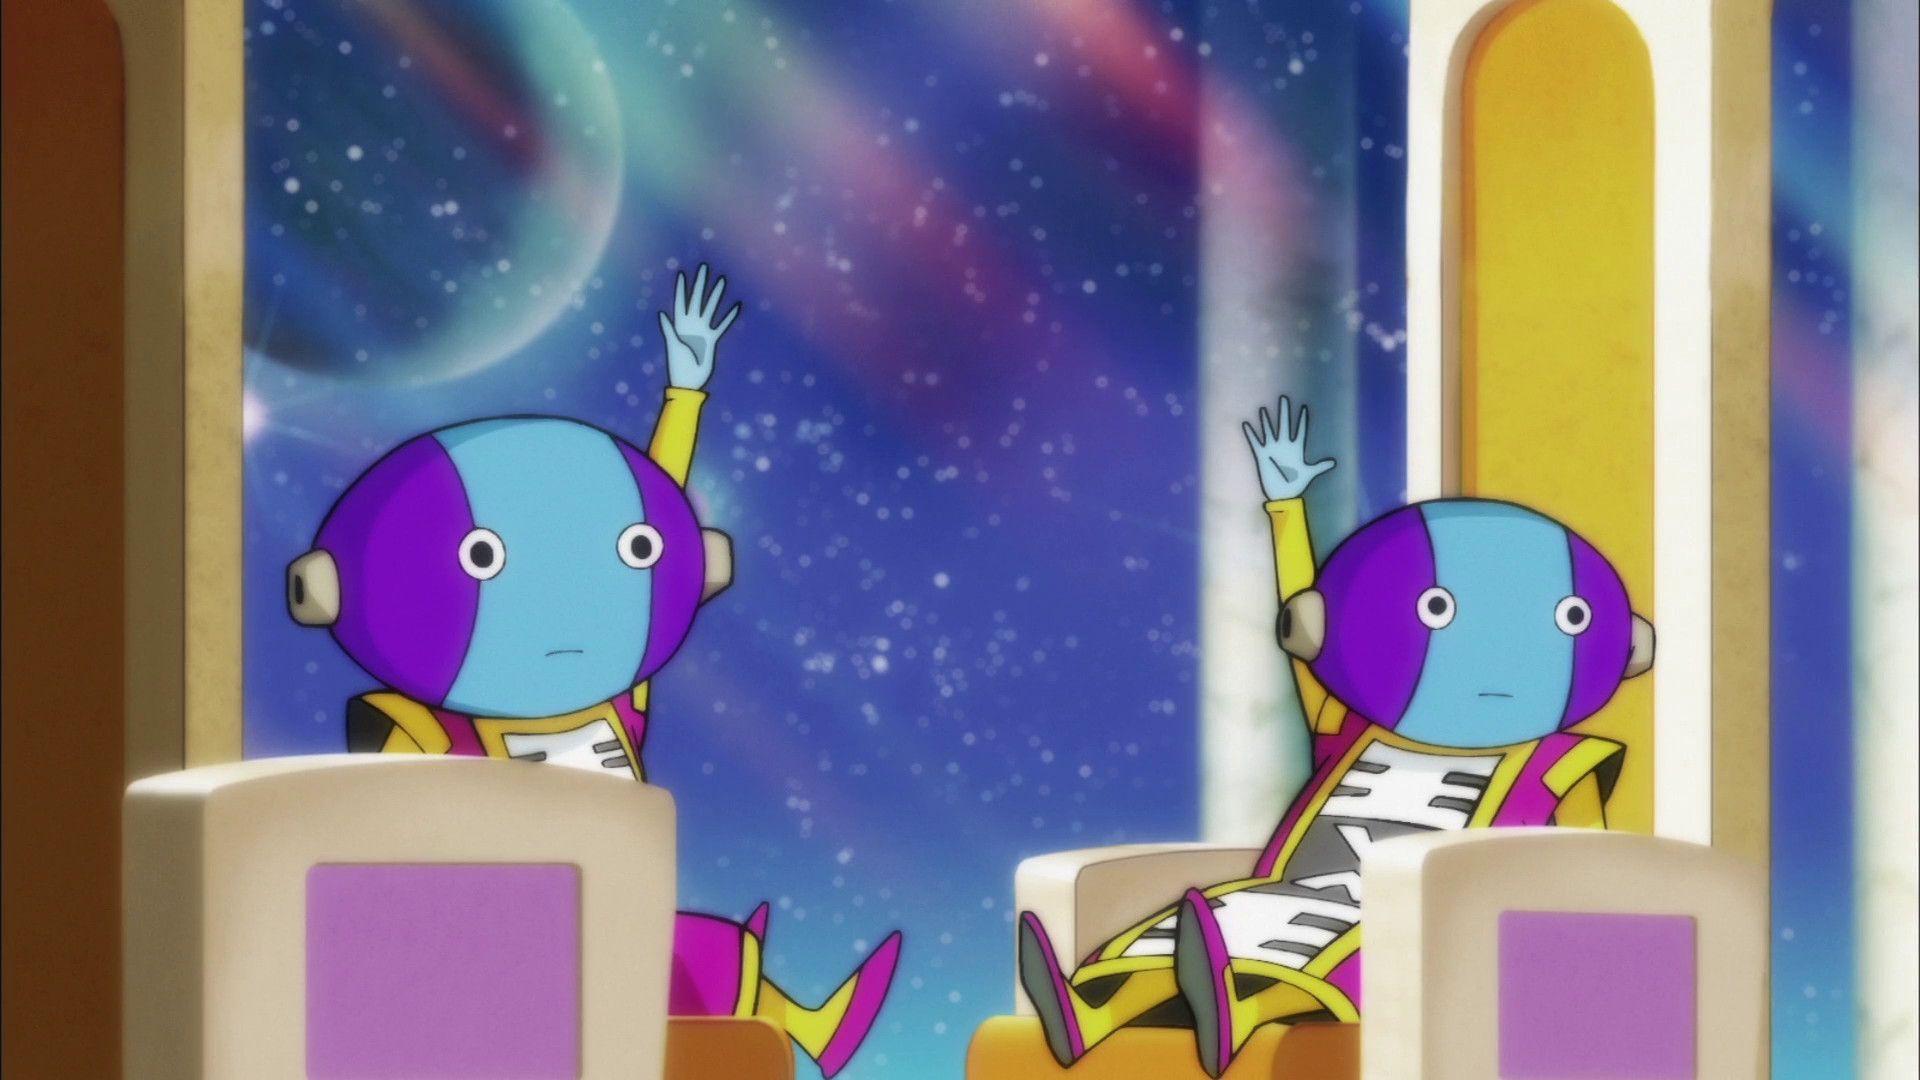 Both Zenos raising their hands desktop wallpaper